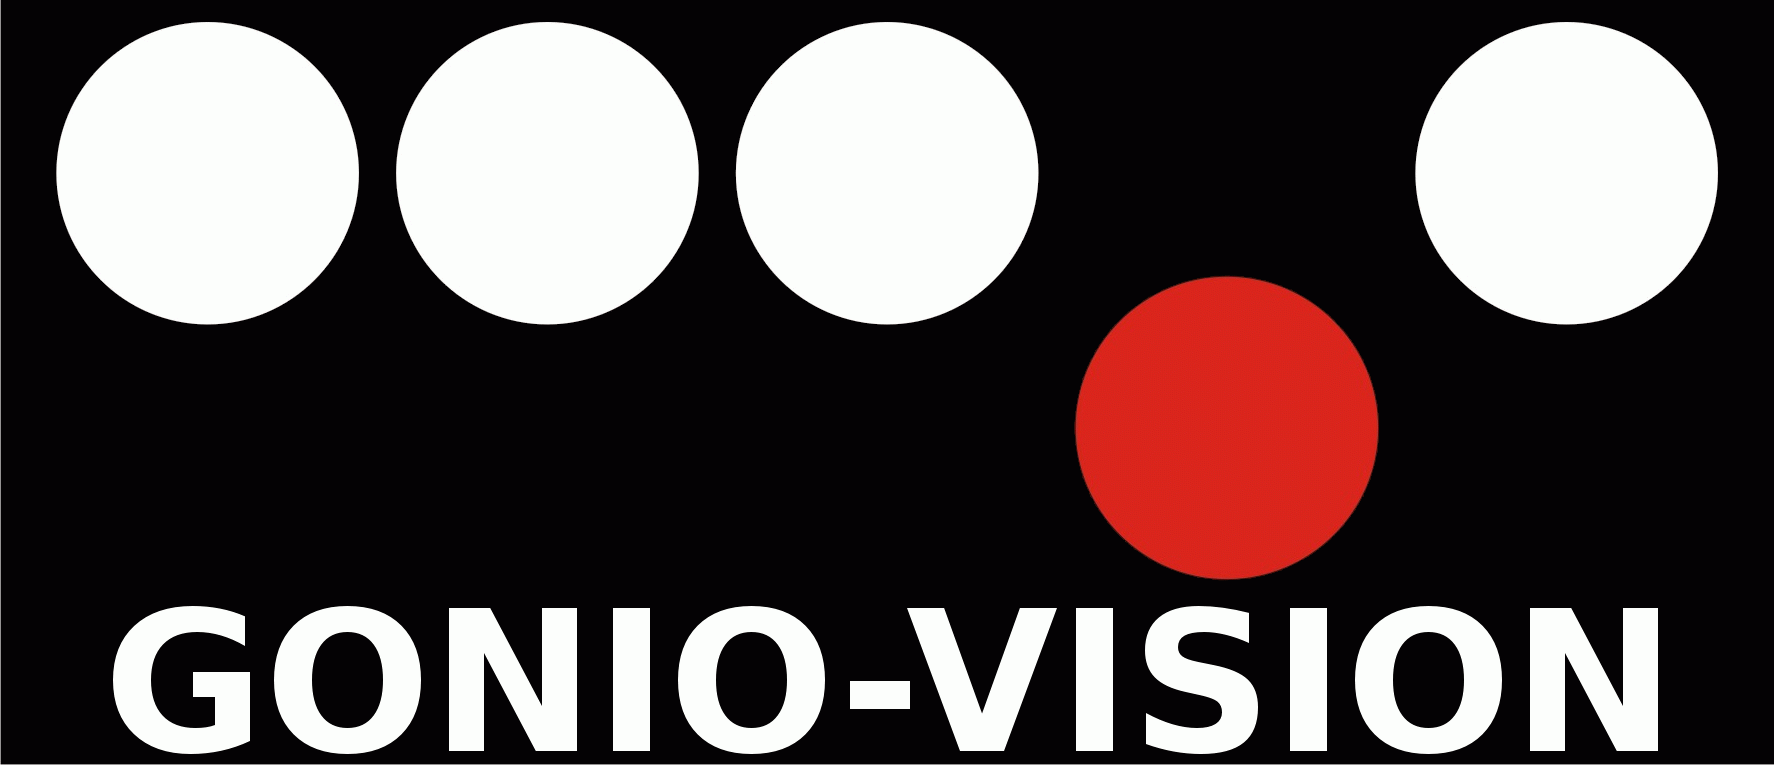 goniovision logo